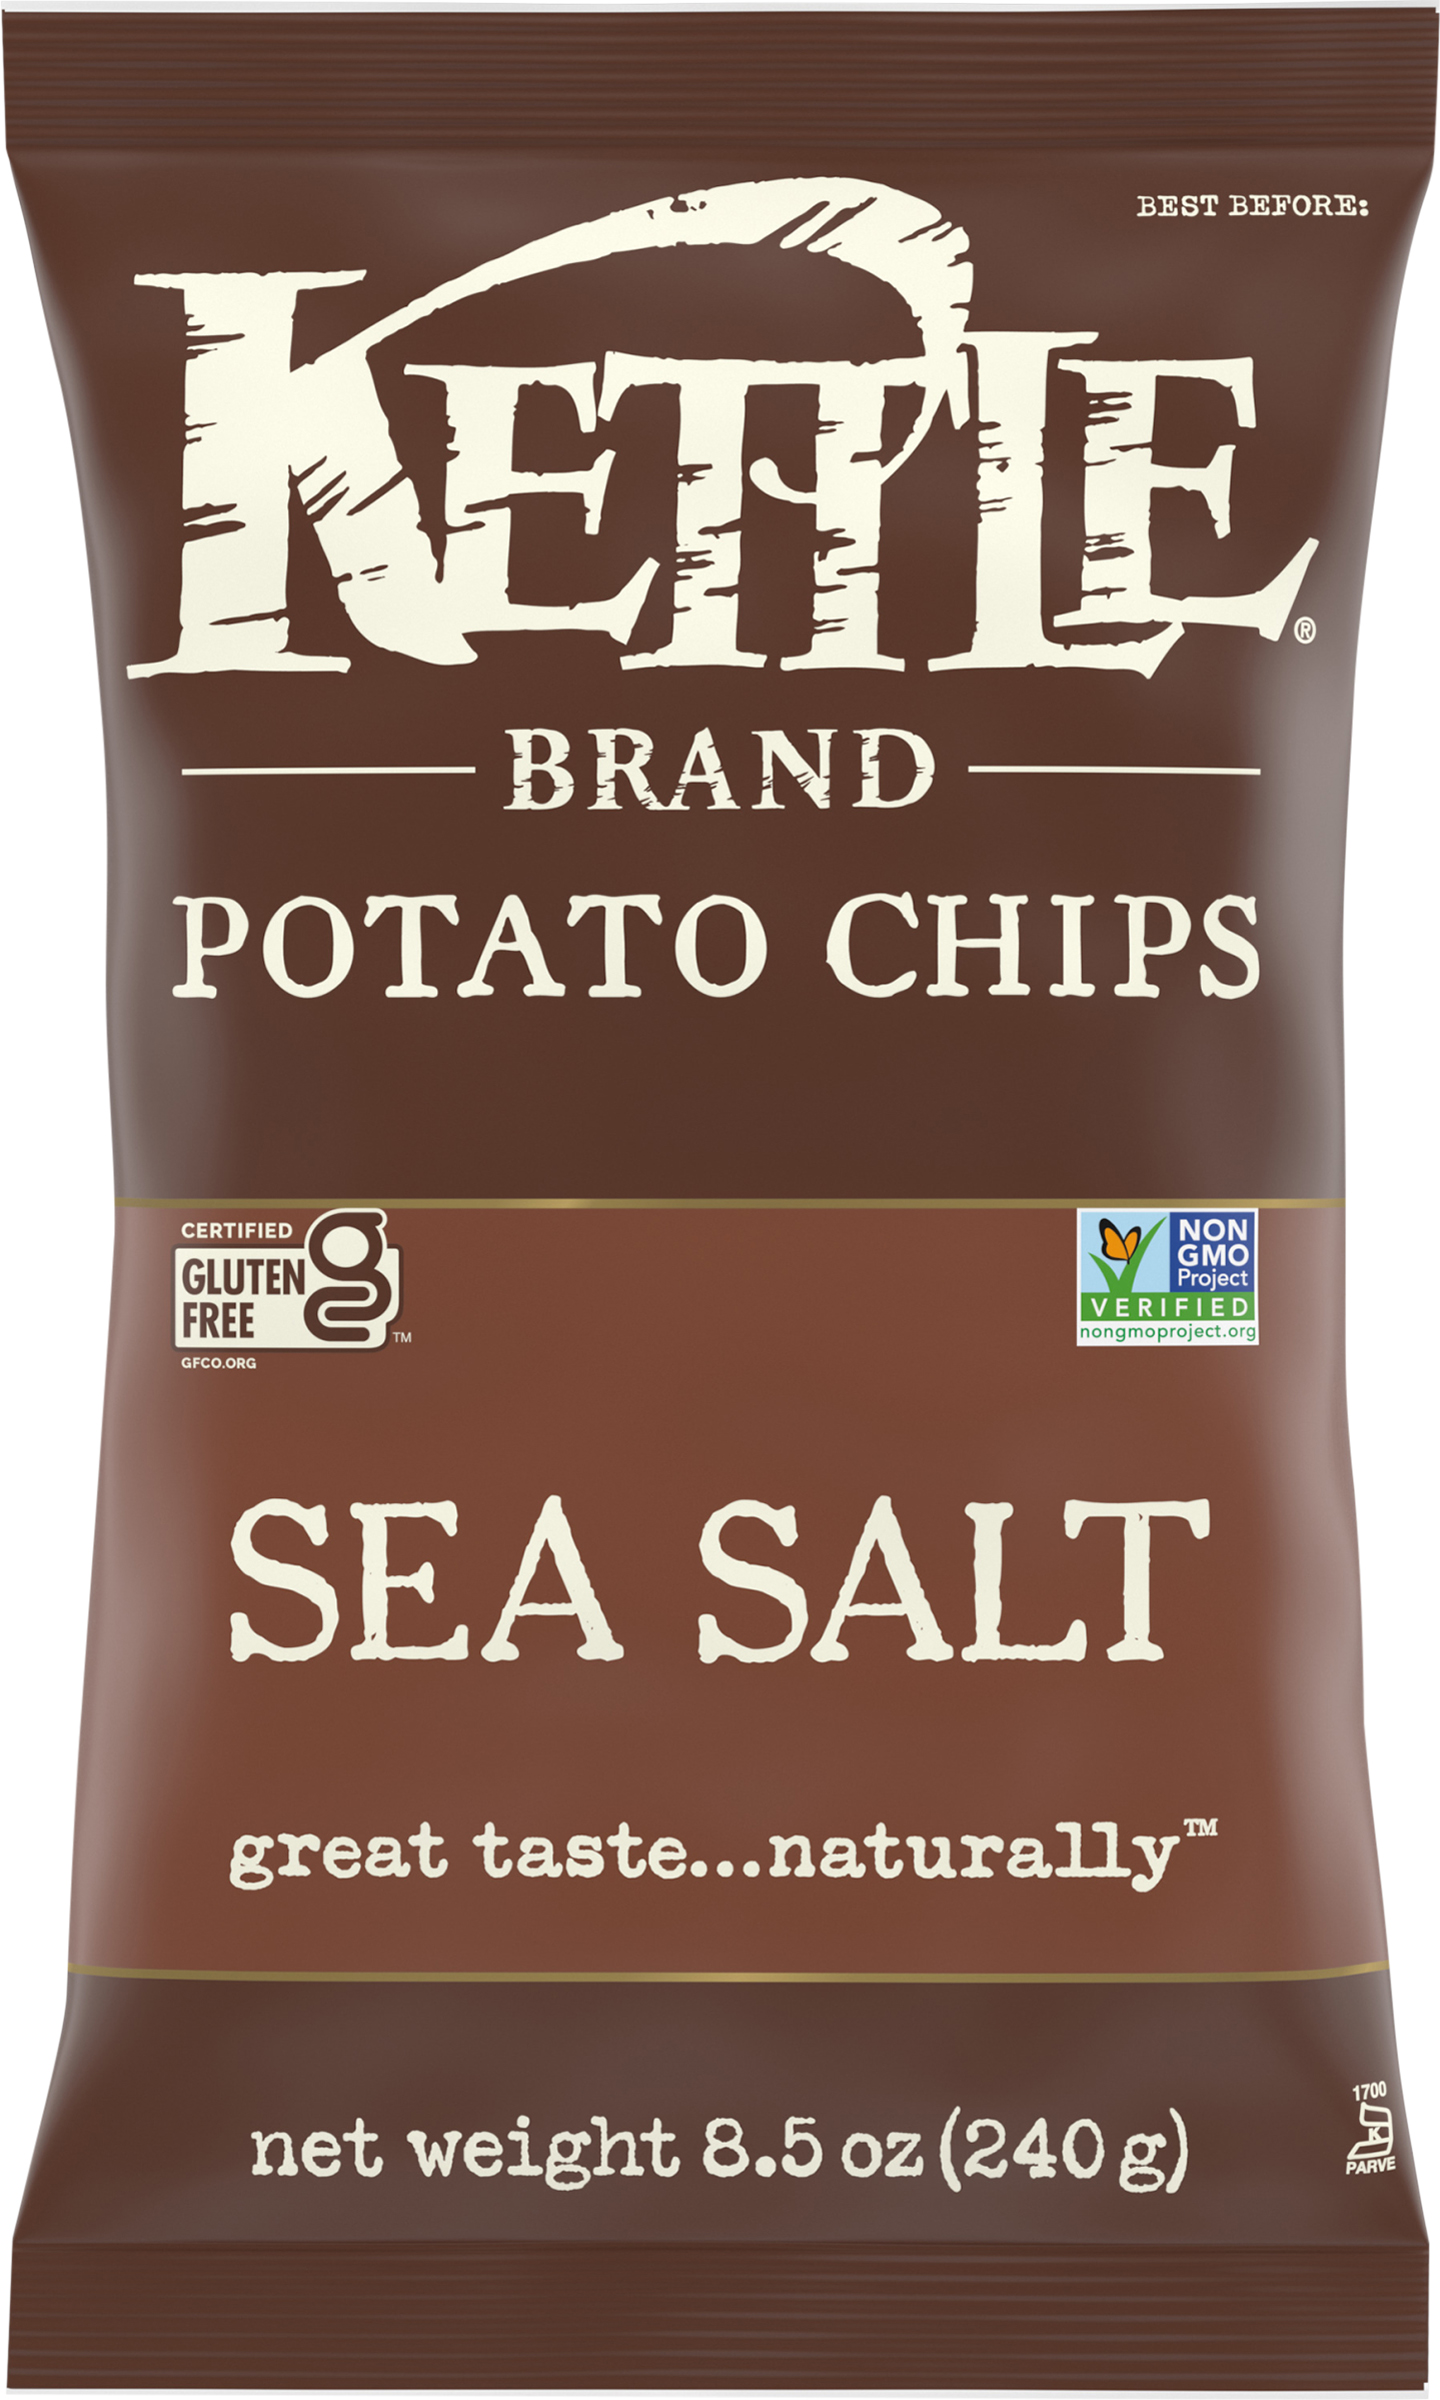 Kettle Brand Sea Salt Potato Chips 8.5 oz